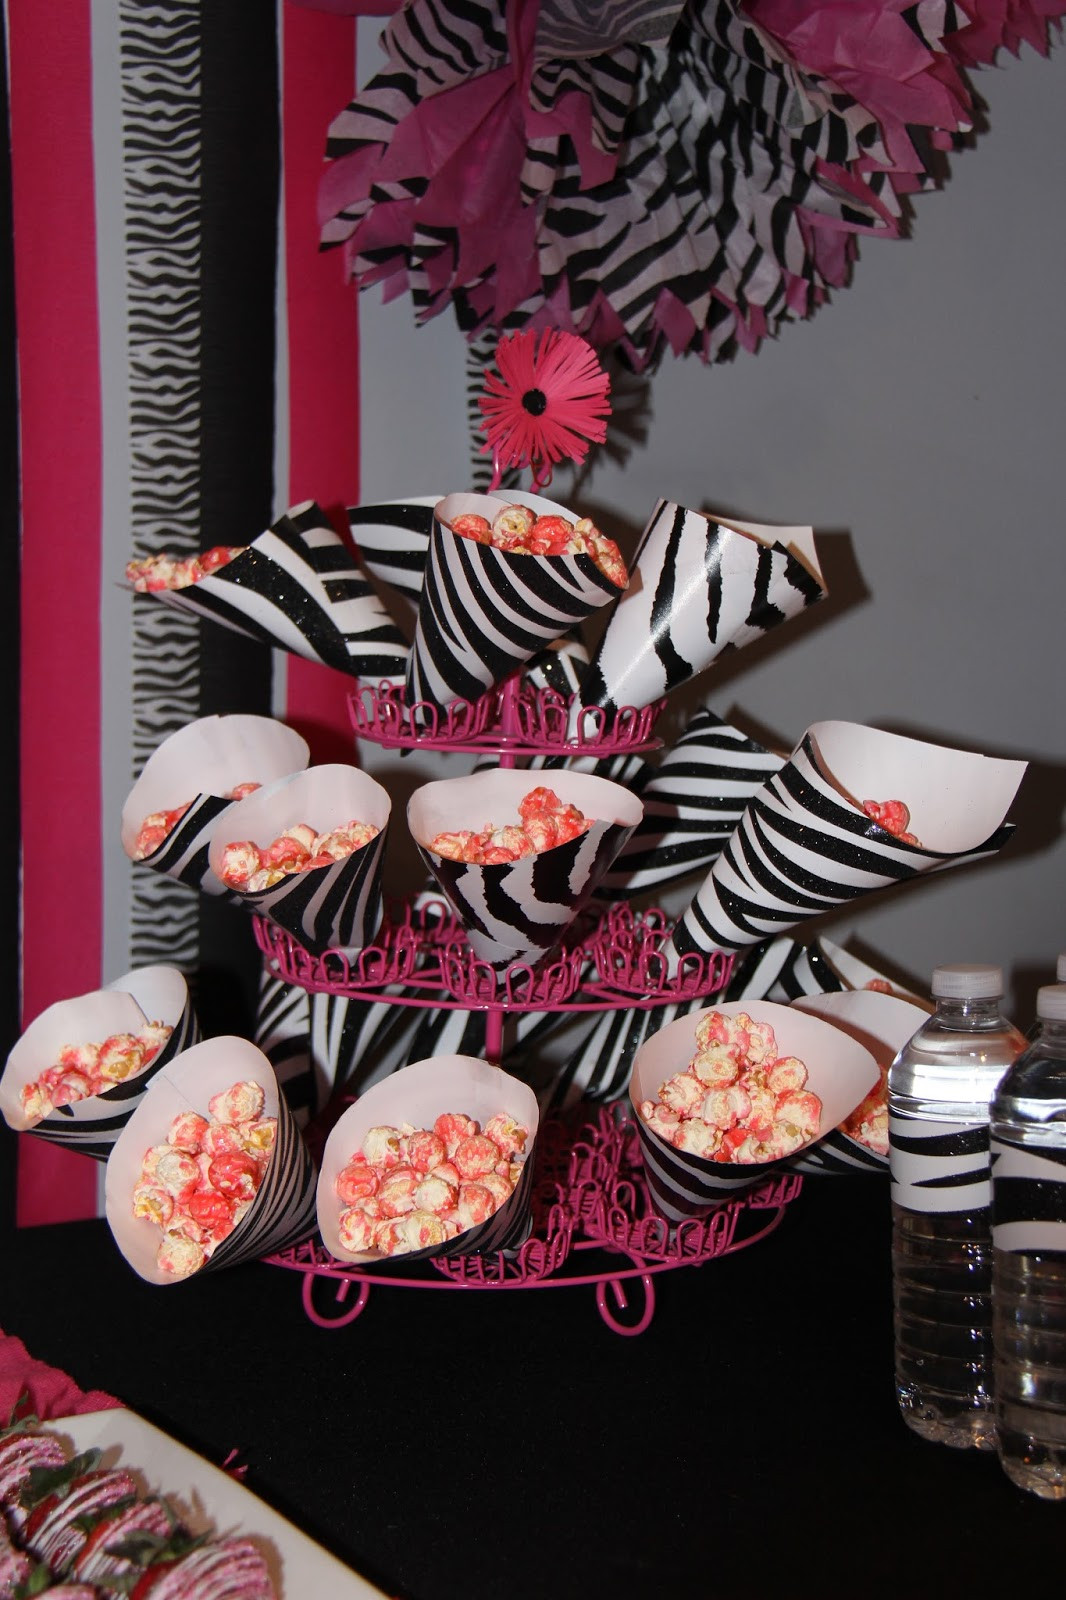 Zebra Print And Pink Birthday Party Ideas
 THREElittleBIRDS Hot Pink and Zebra Print Party